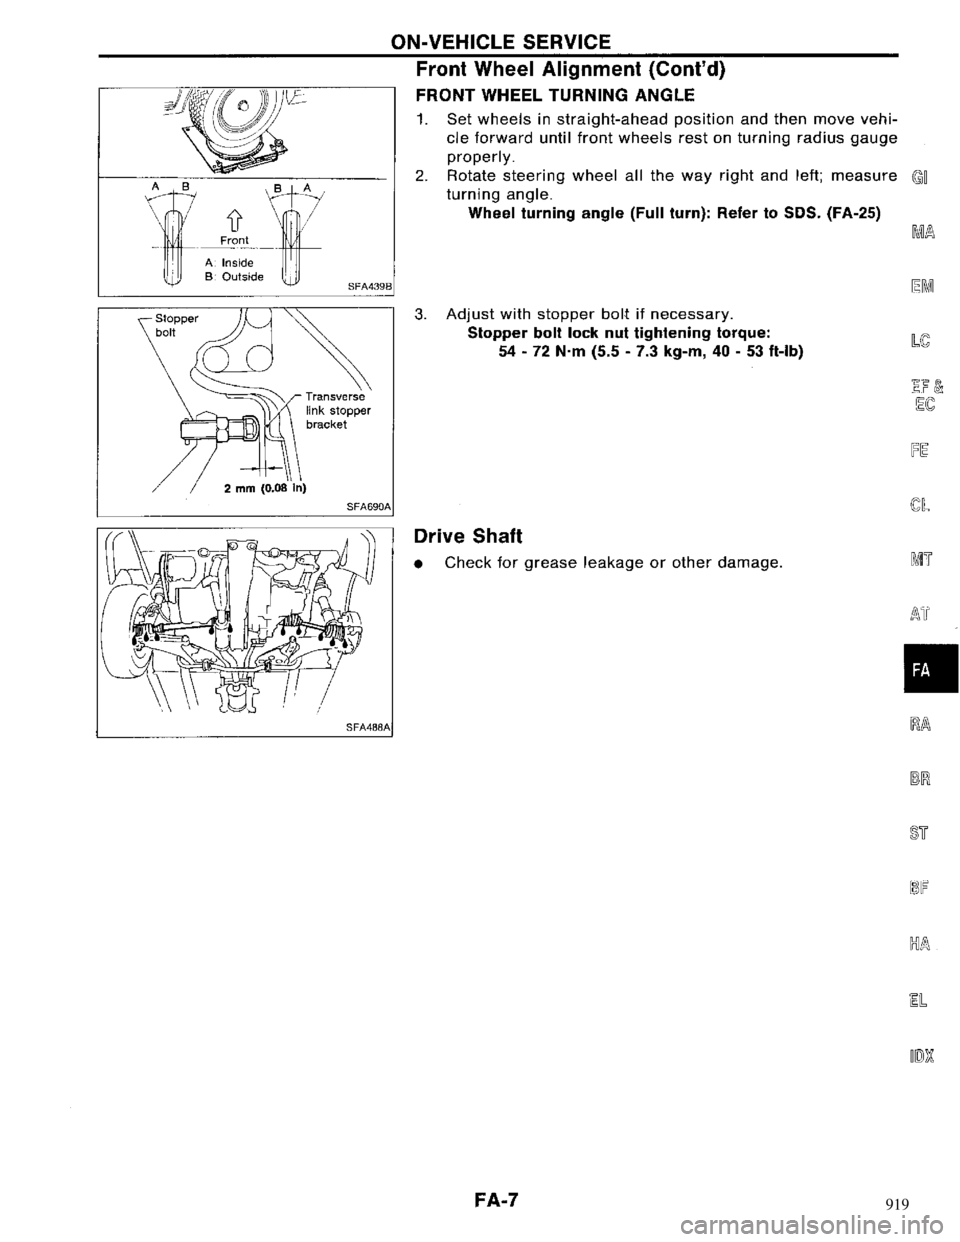 NISSAN MAXIMA 1994 A32 / 4.G Front Suspension Workshop Manual 919 